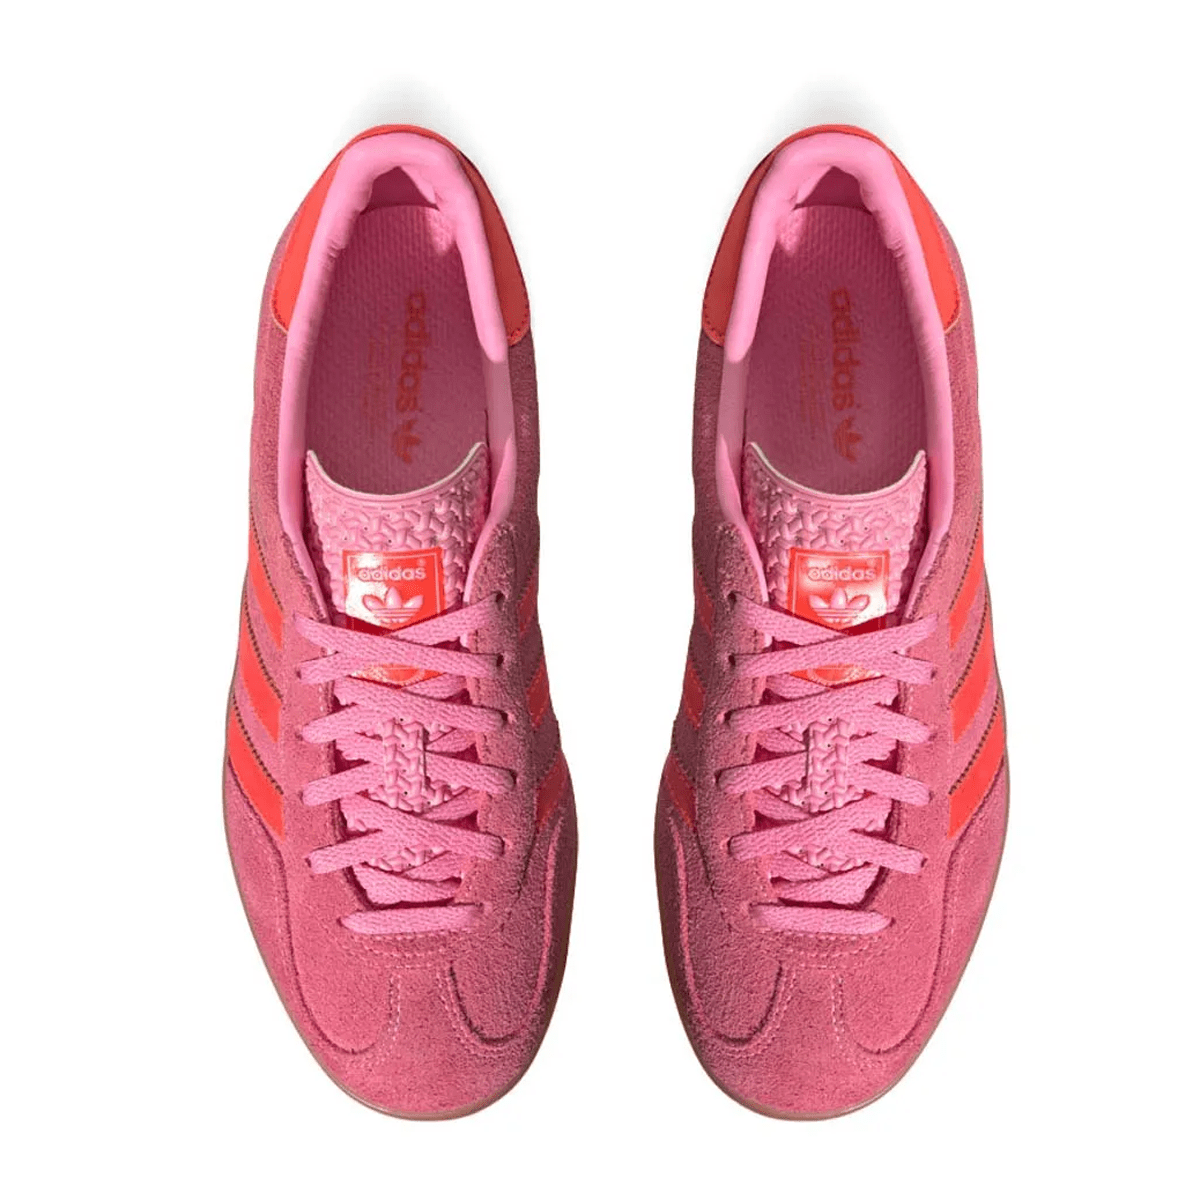 Adidas Gazelle Indoor Rosa/Vermelho "Beam Pink Solar Red" Adidas Gazelle Indoor Blizz Sneakers 